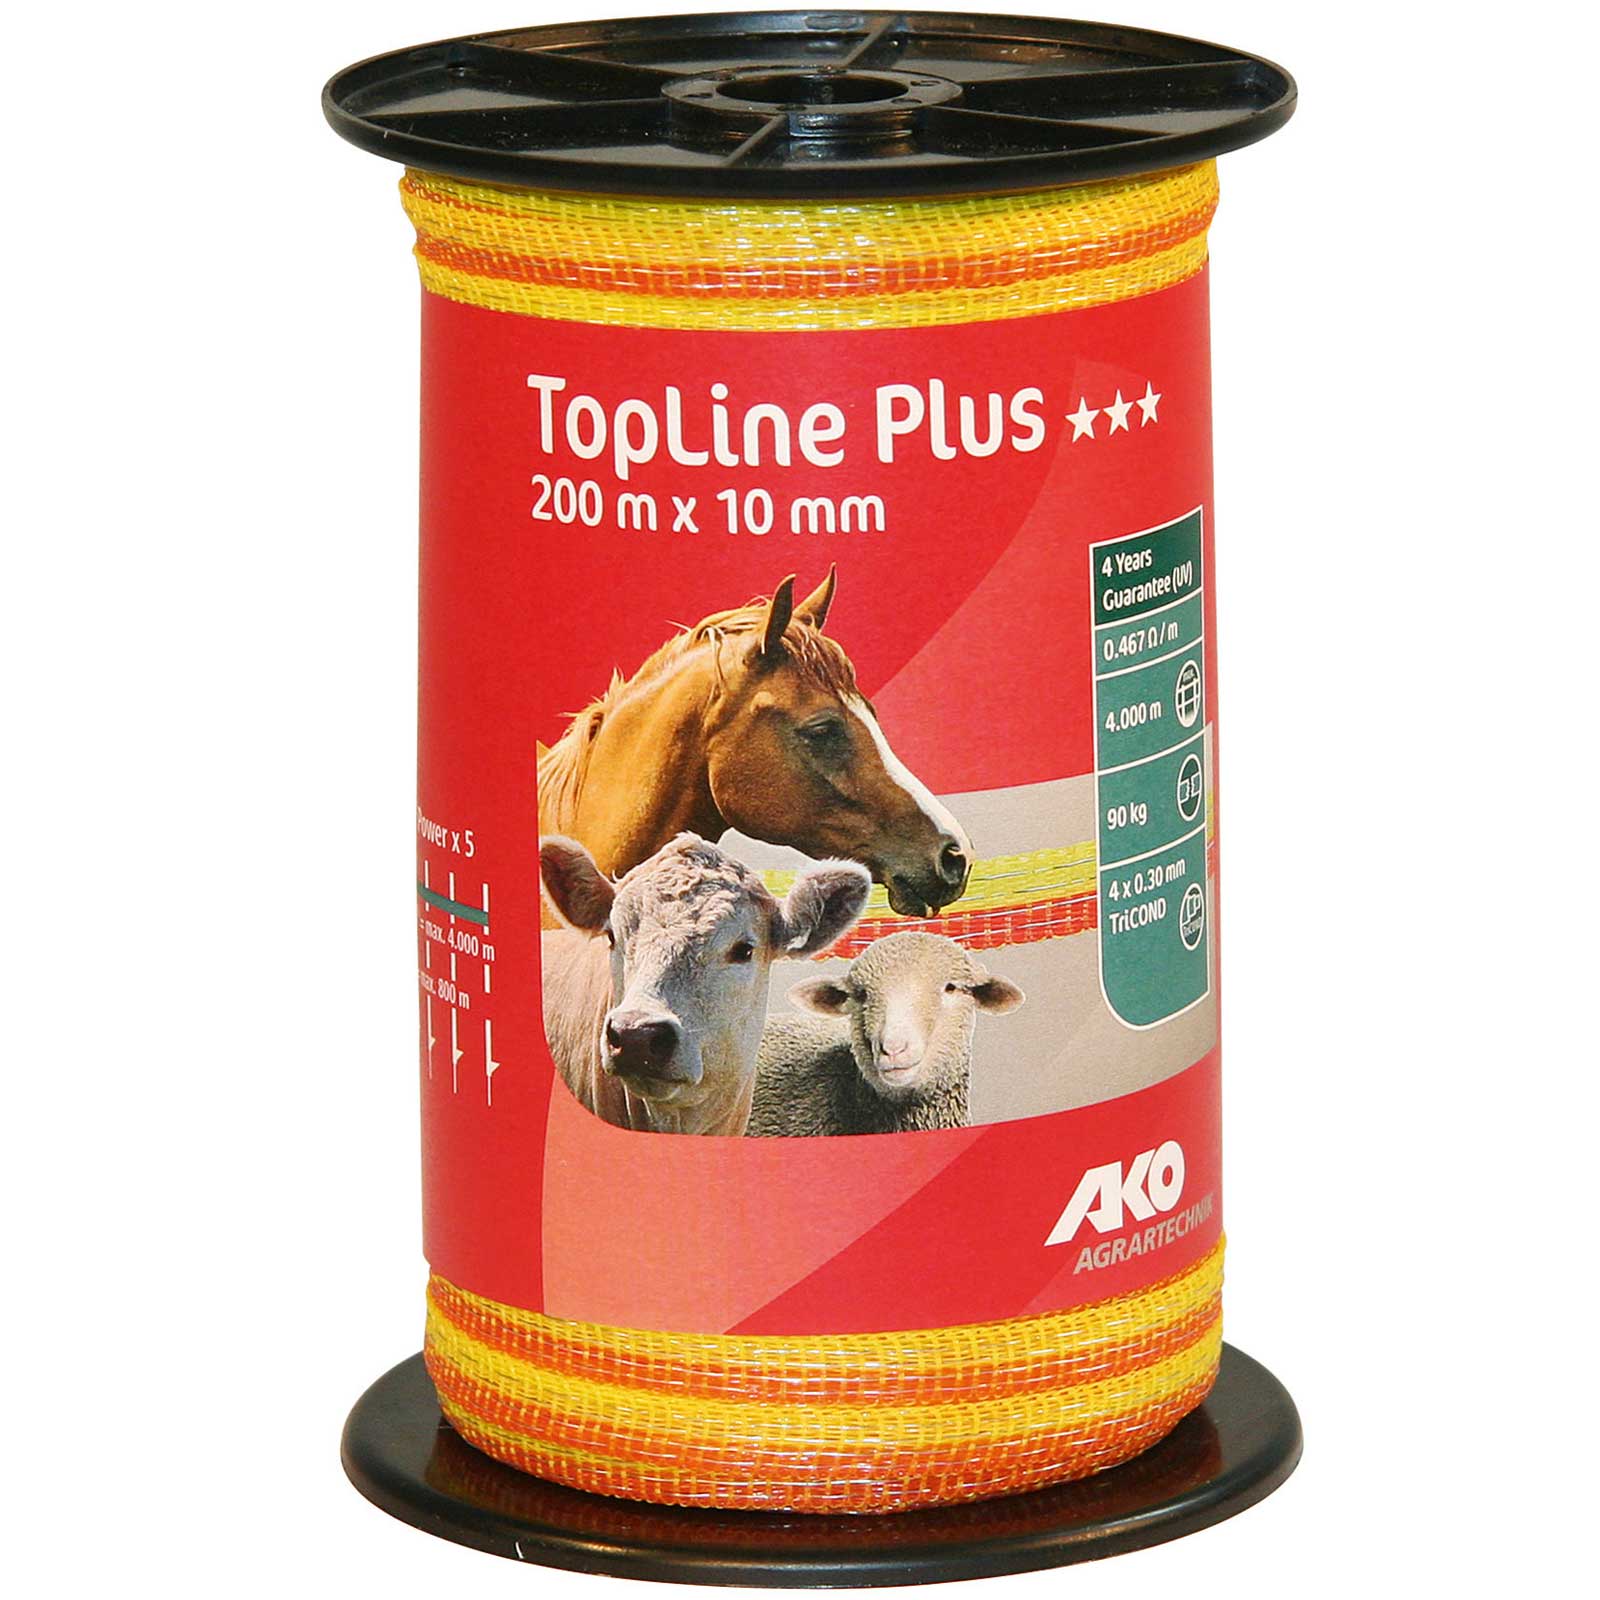 Ako Pasture Fence Tape TopLine Plus 200m, 0.30 TriCOND, yellow-orange 200 m x 10 mm